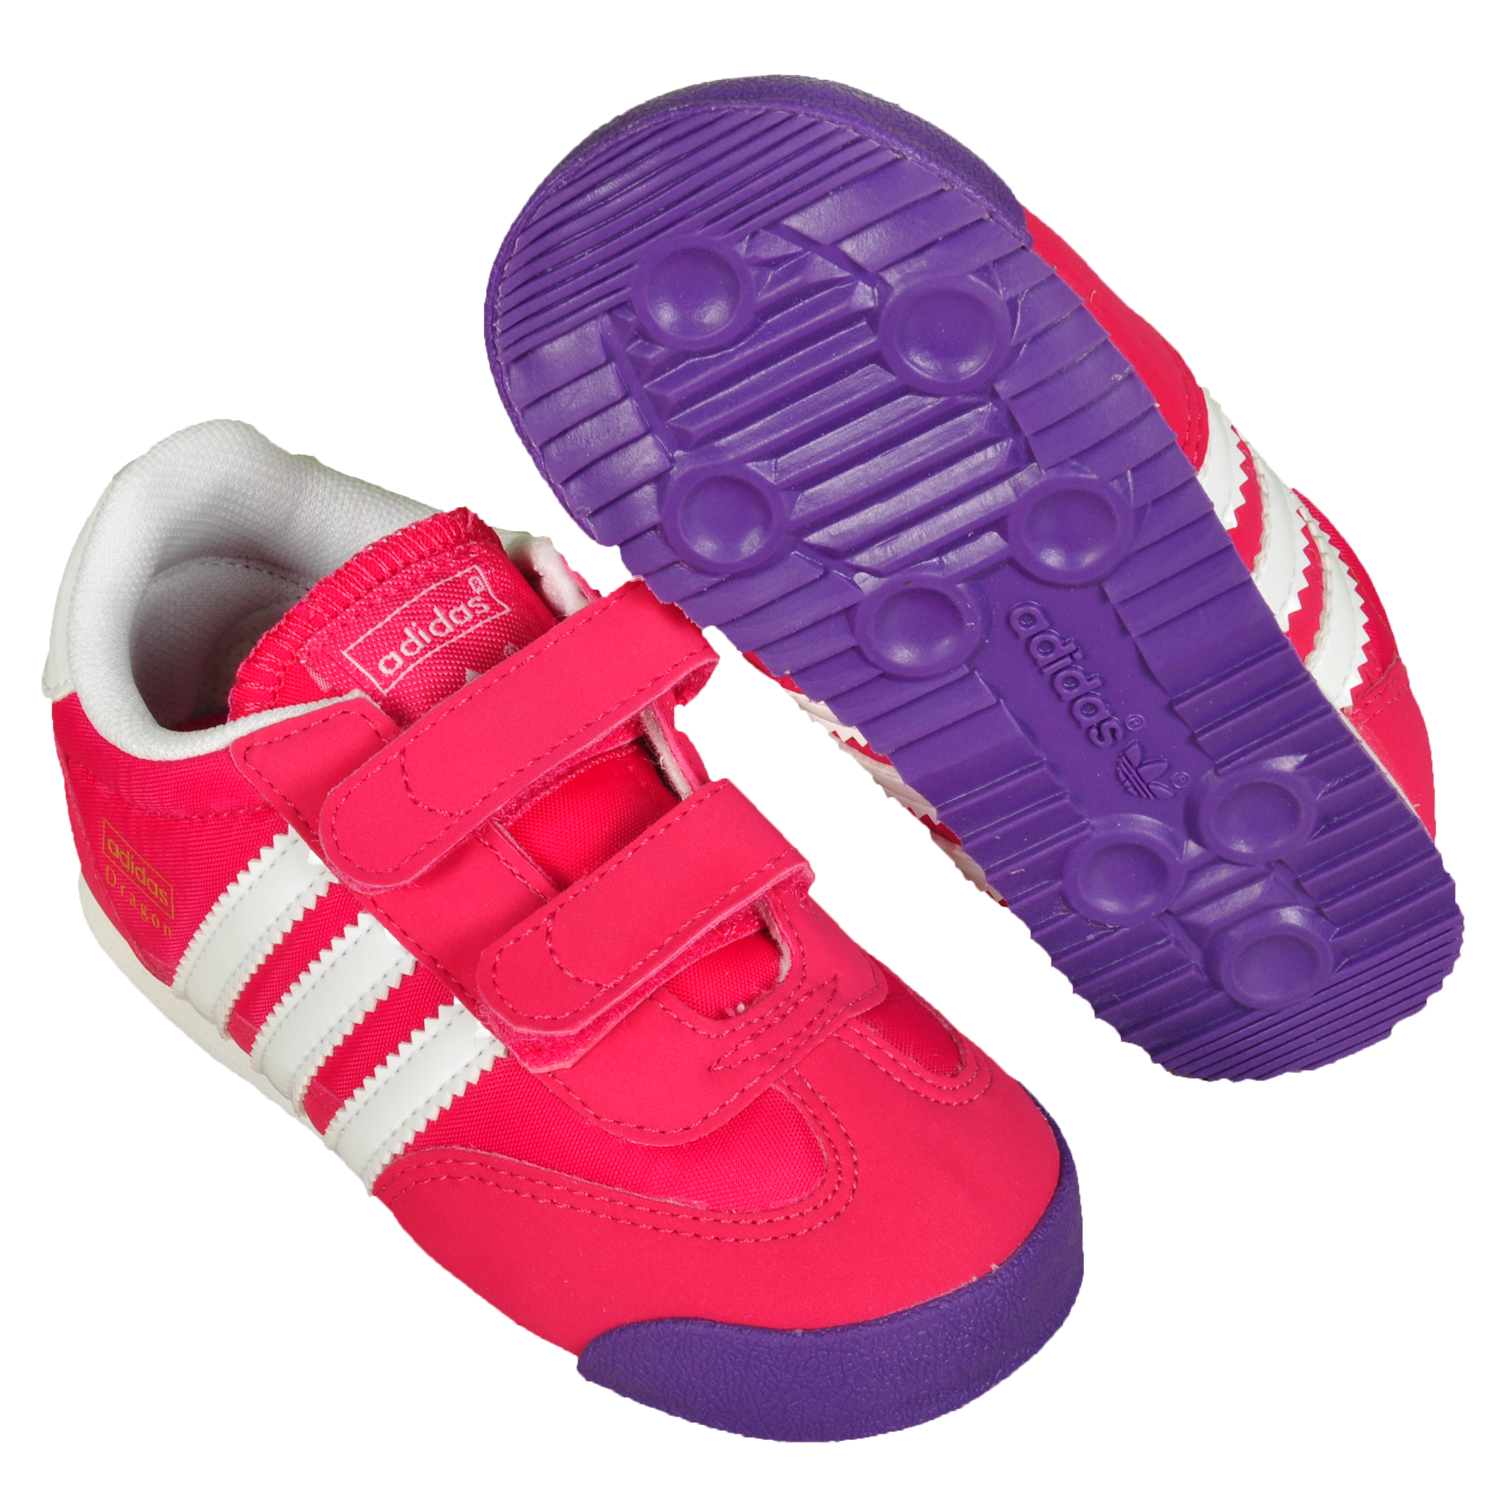 Foto Adidas Shoe Dragon Cf 1 Zapatos De Bebé Rosa Púrpura foto 98475